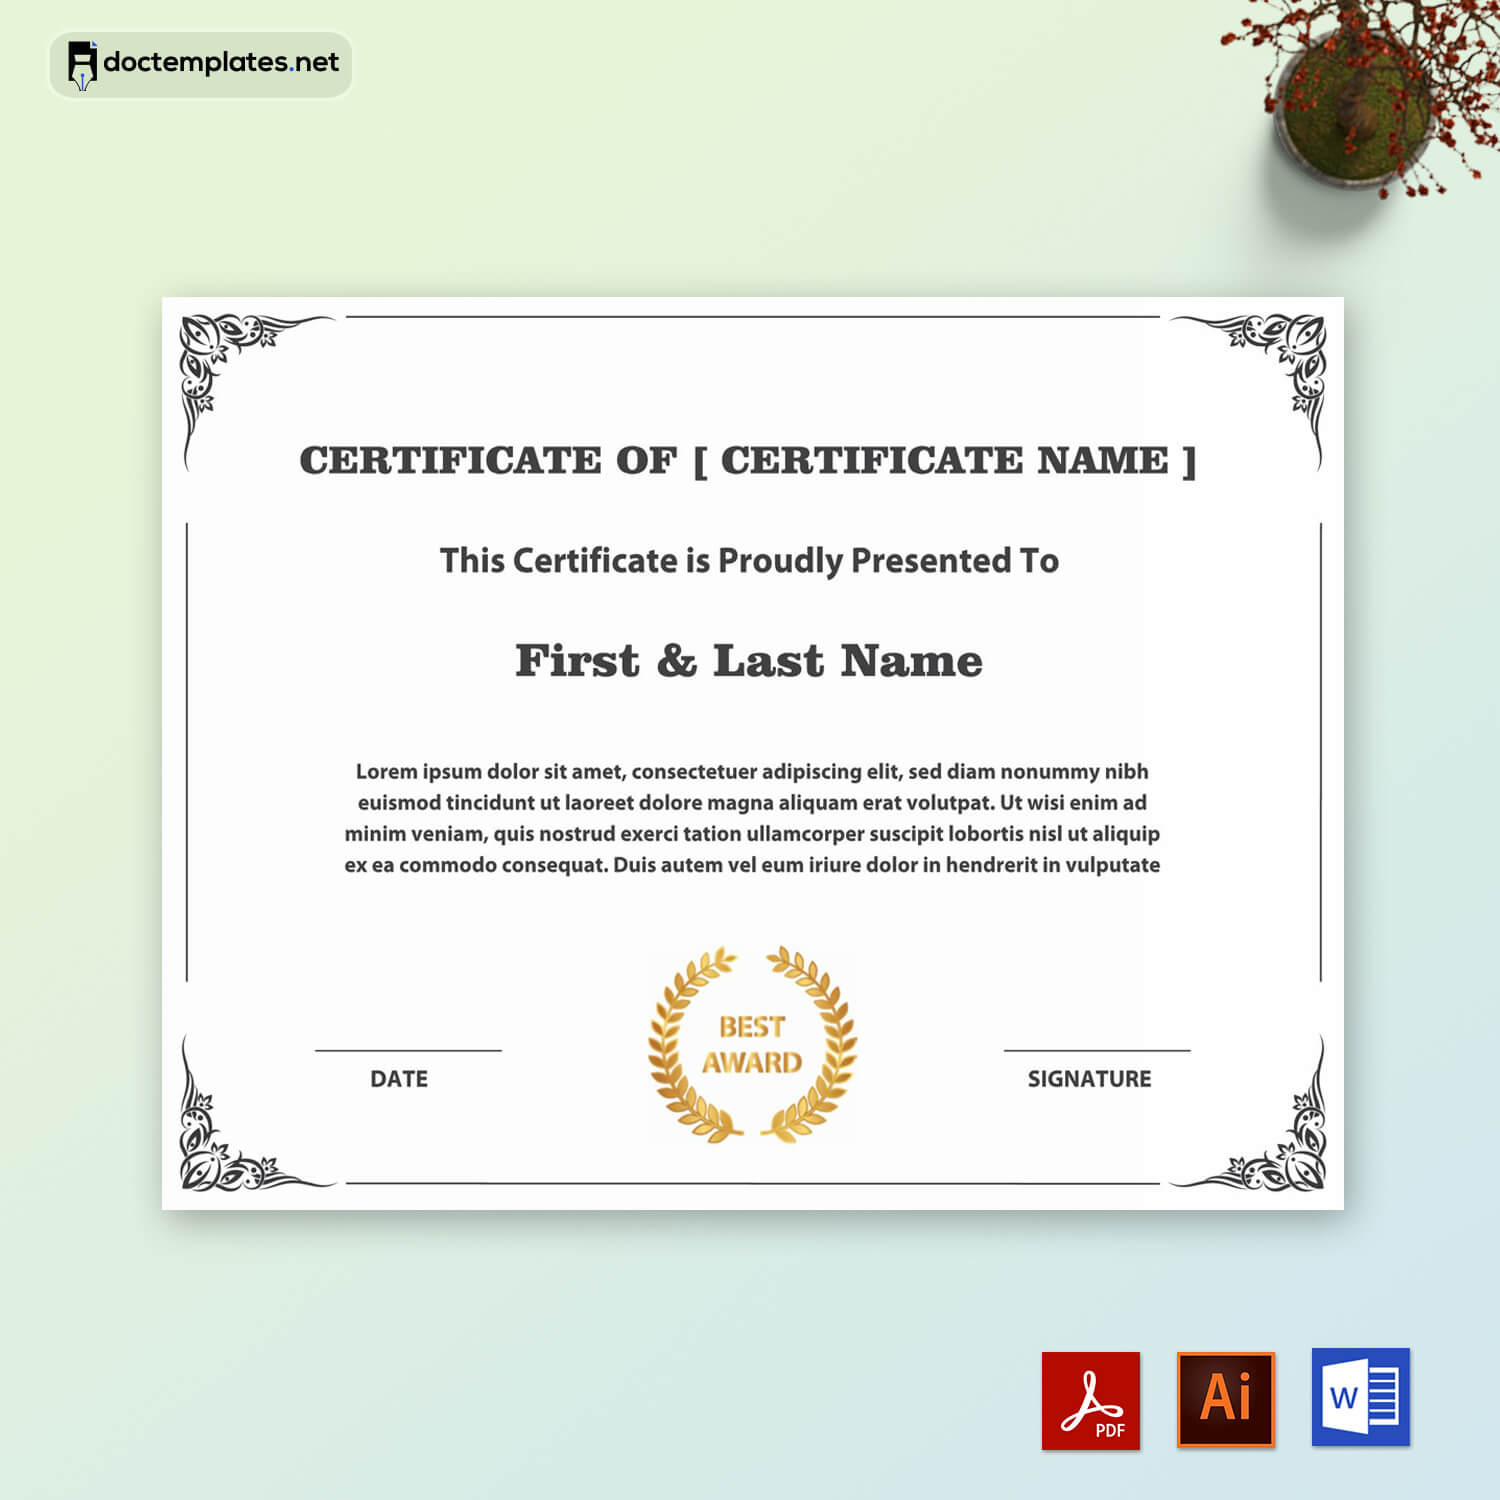 Free Award Certificate Template